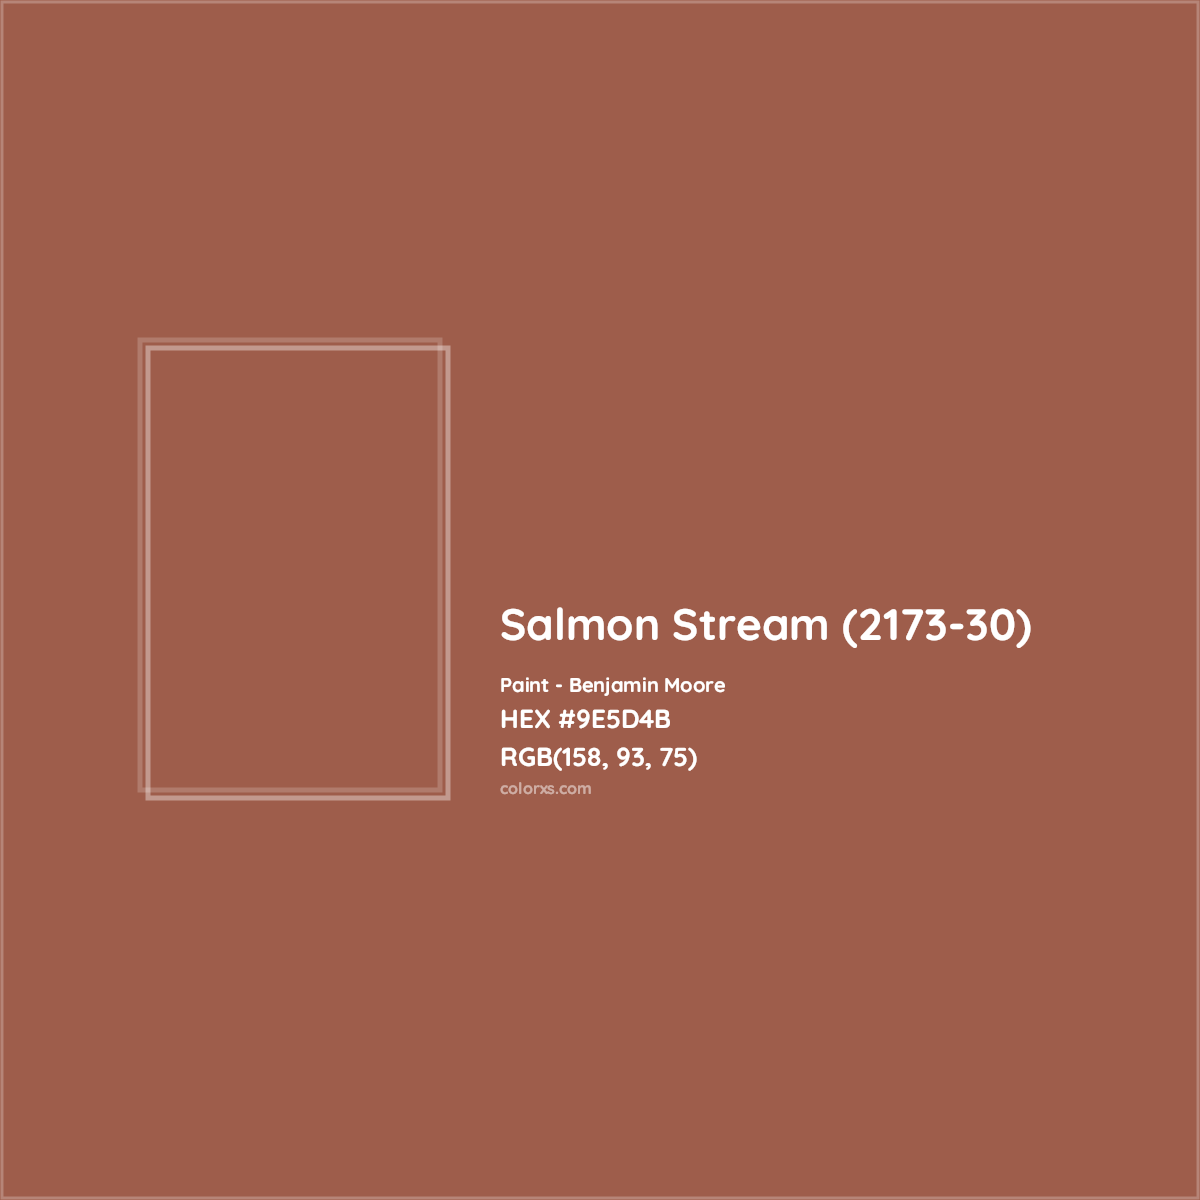 HEX #9E5D4B Salmon Stream (2173-30) Paint Benjamin Moore - Color Code